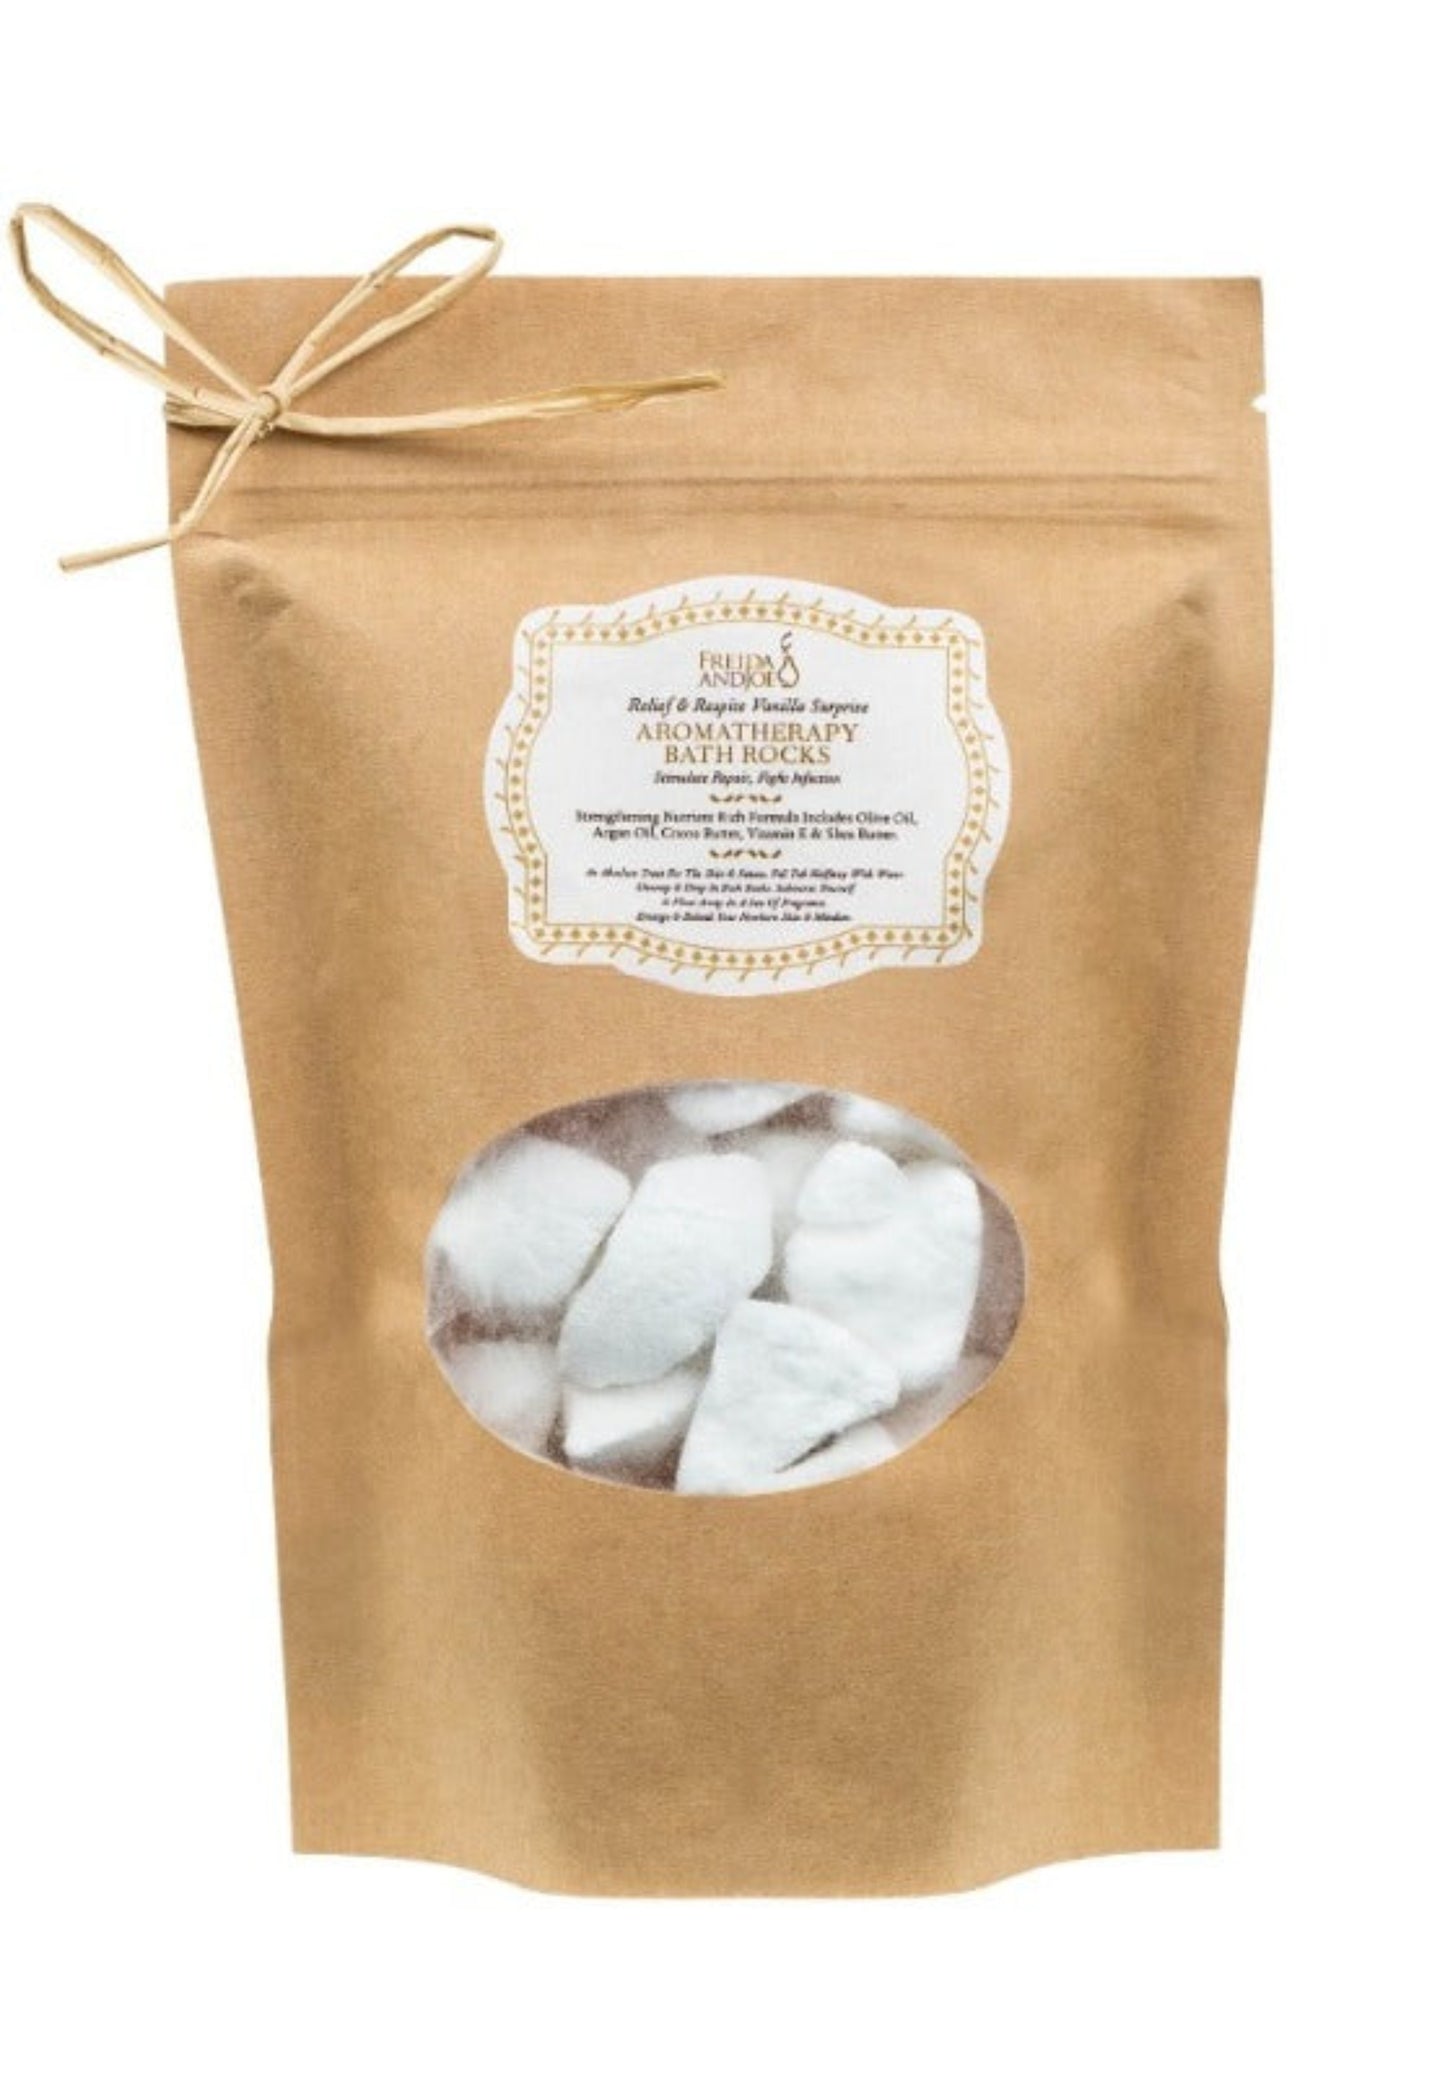 250G Aromatherapy Vanilla Bath Rocks - Enriched with Essential Oils, Shea Butter, & Vitamin E